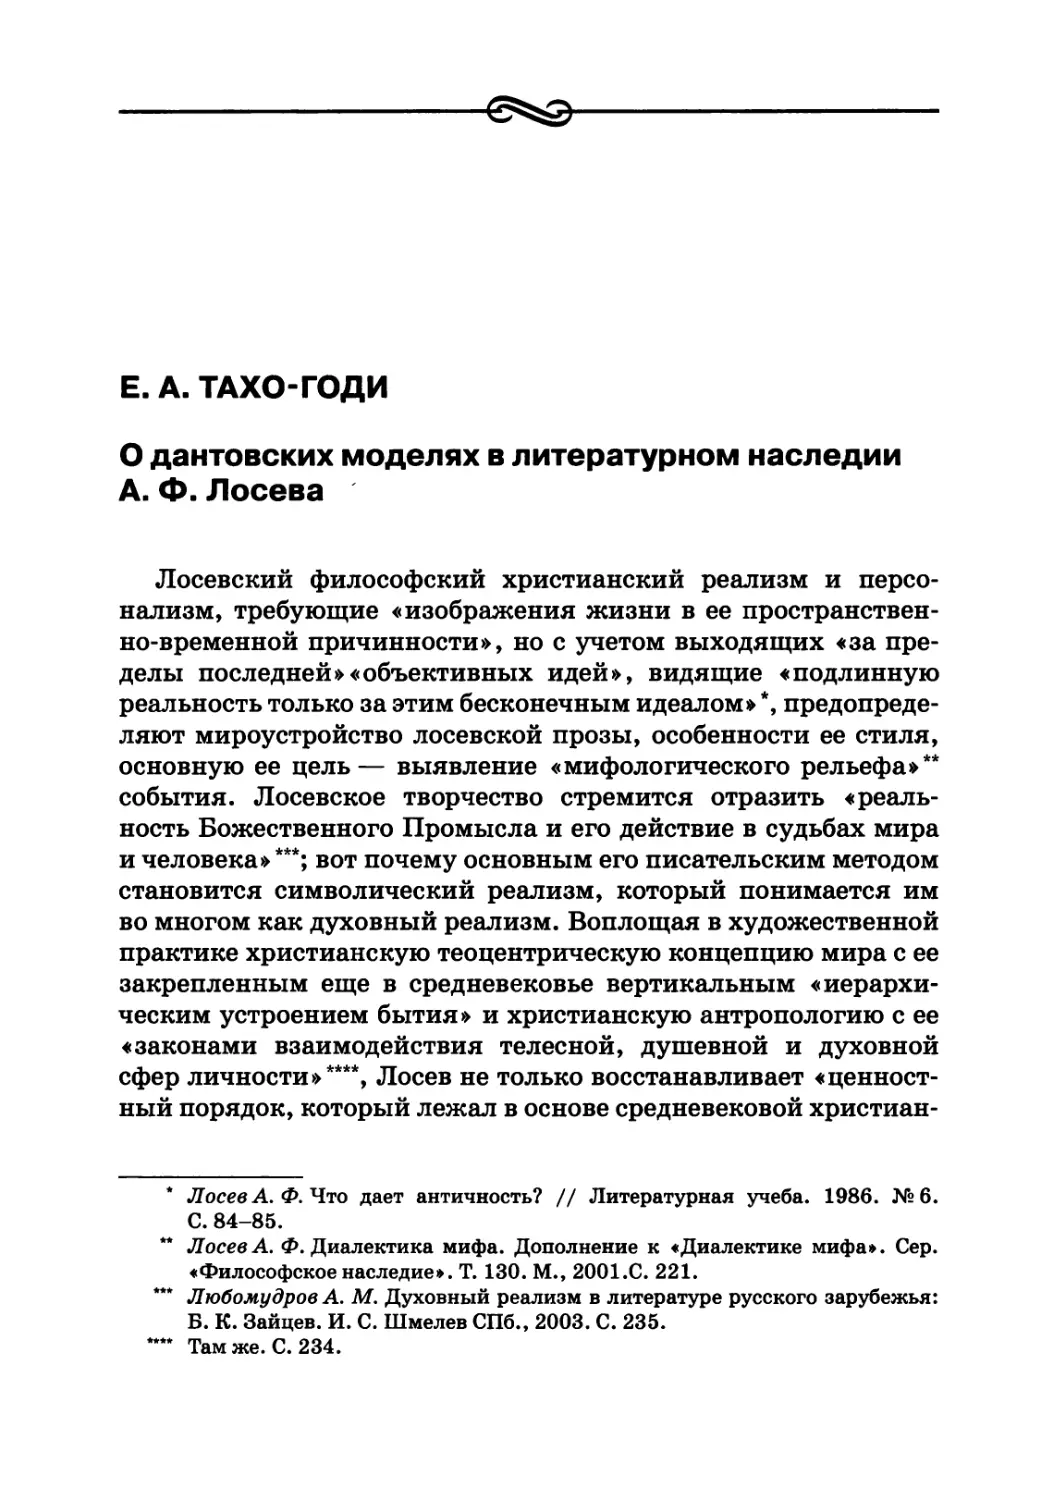 Е. А. ТАХО-ГОДИ.  О дантовских моделях в литературном наследии А. Ф. Лосева